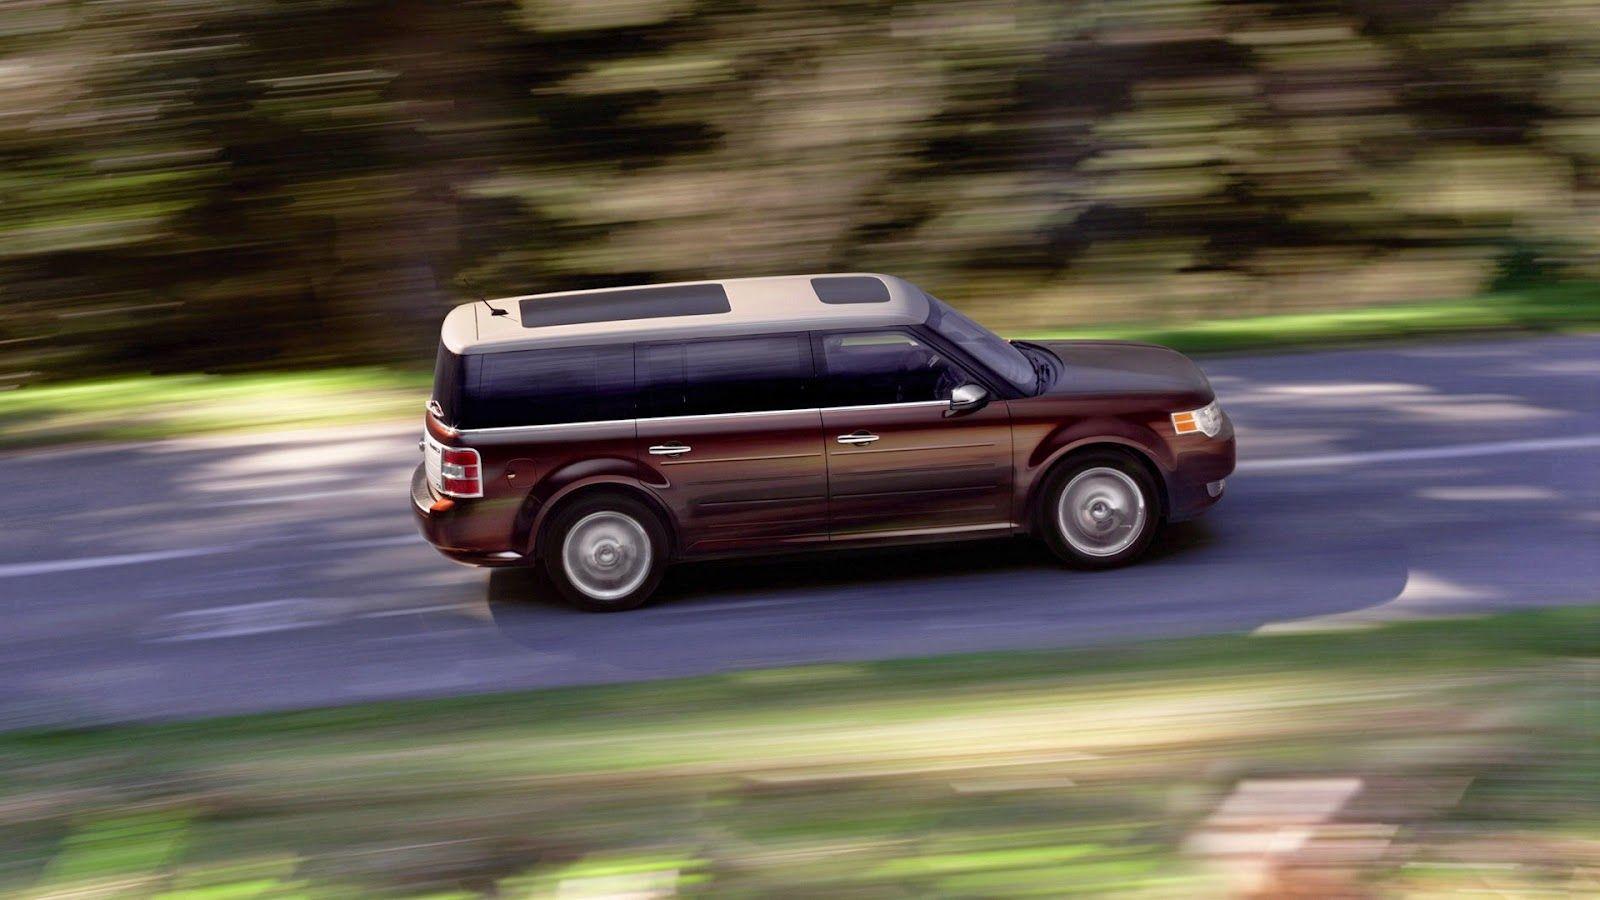 Ford Cars Wallpaper HD. TOP CARS WALLPAPER HD